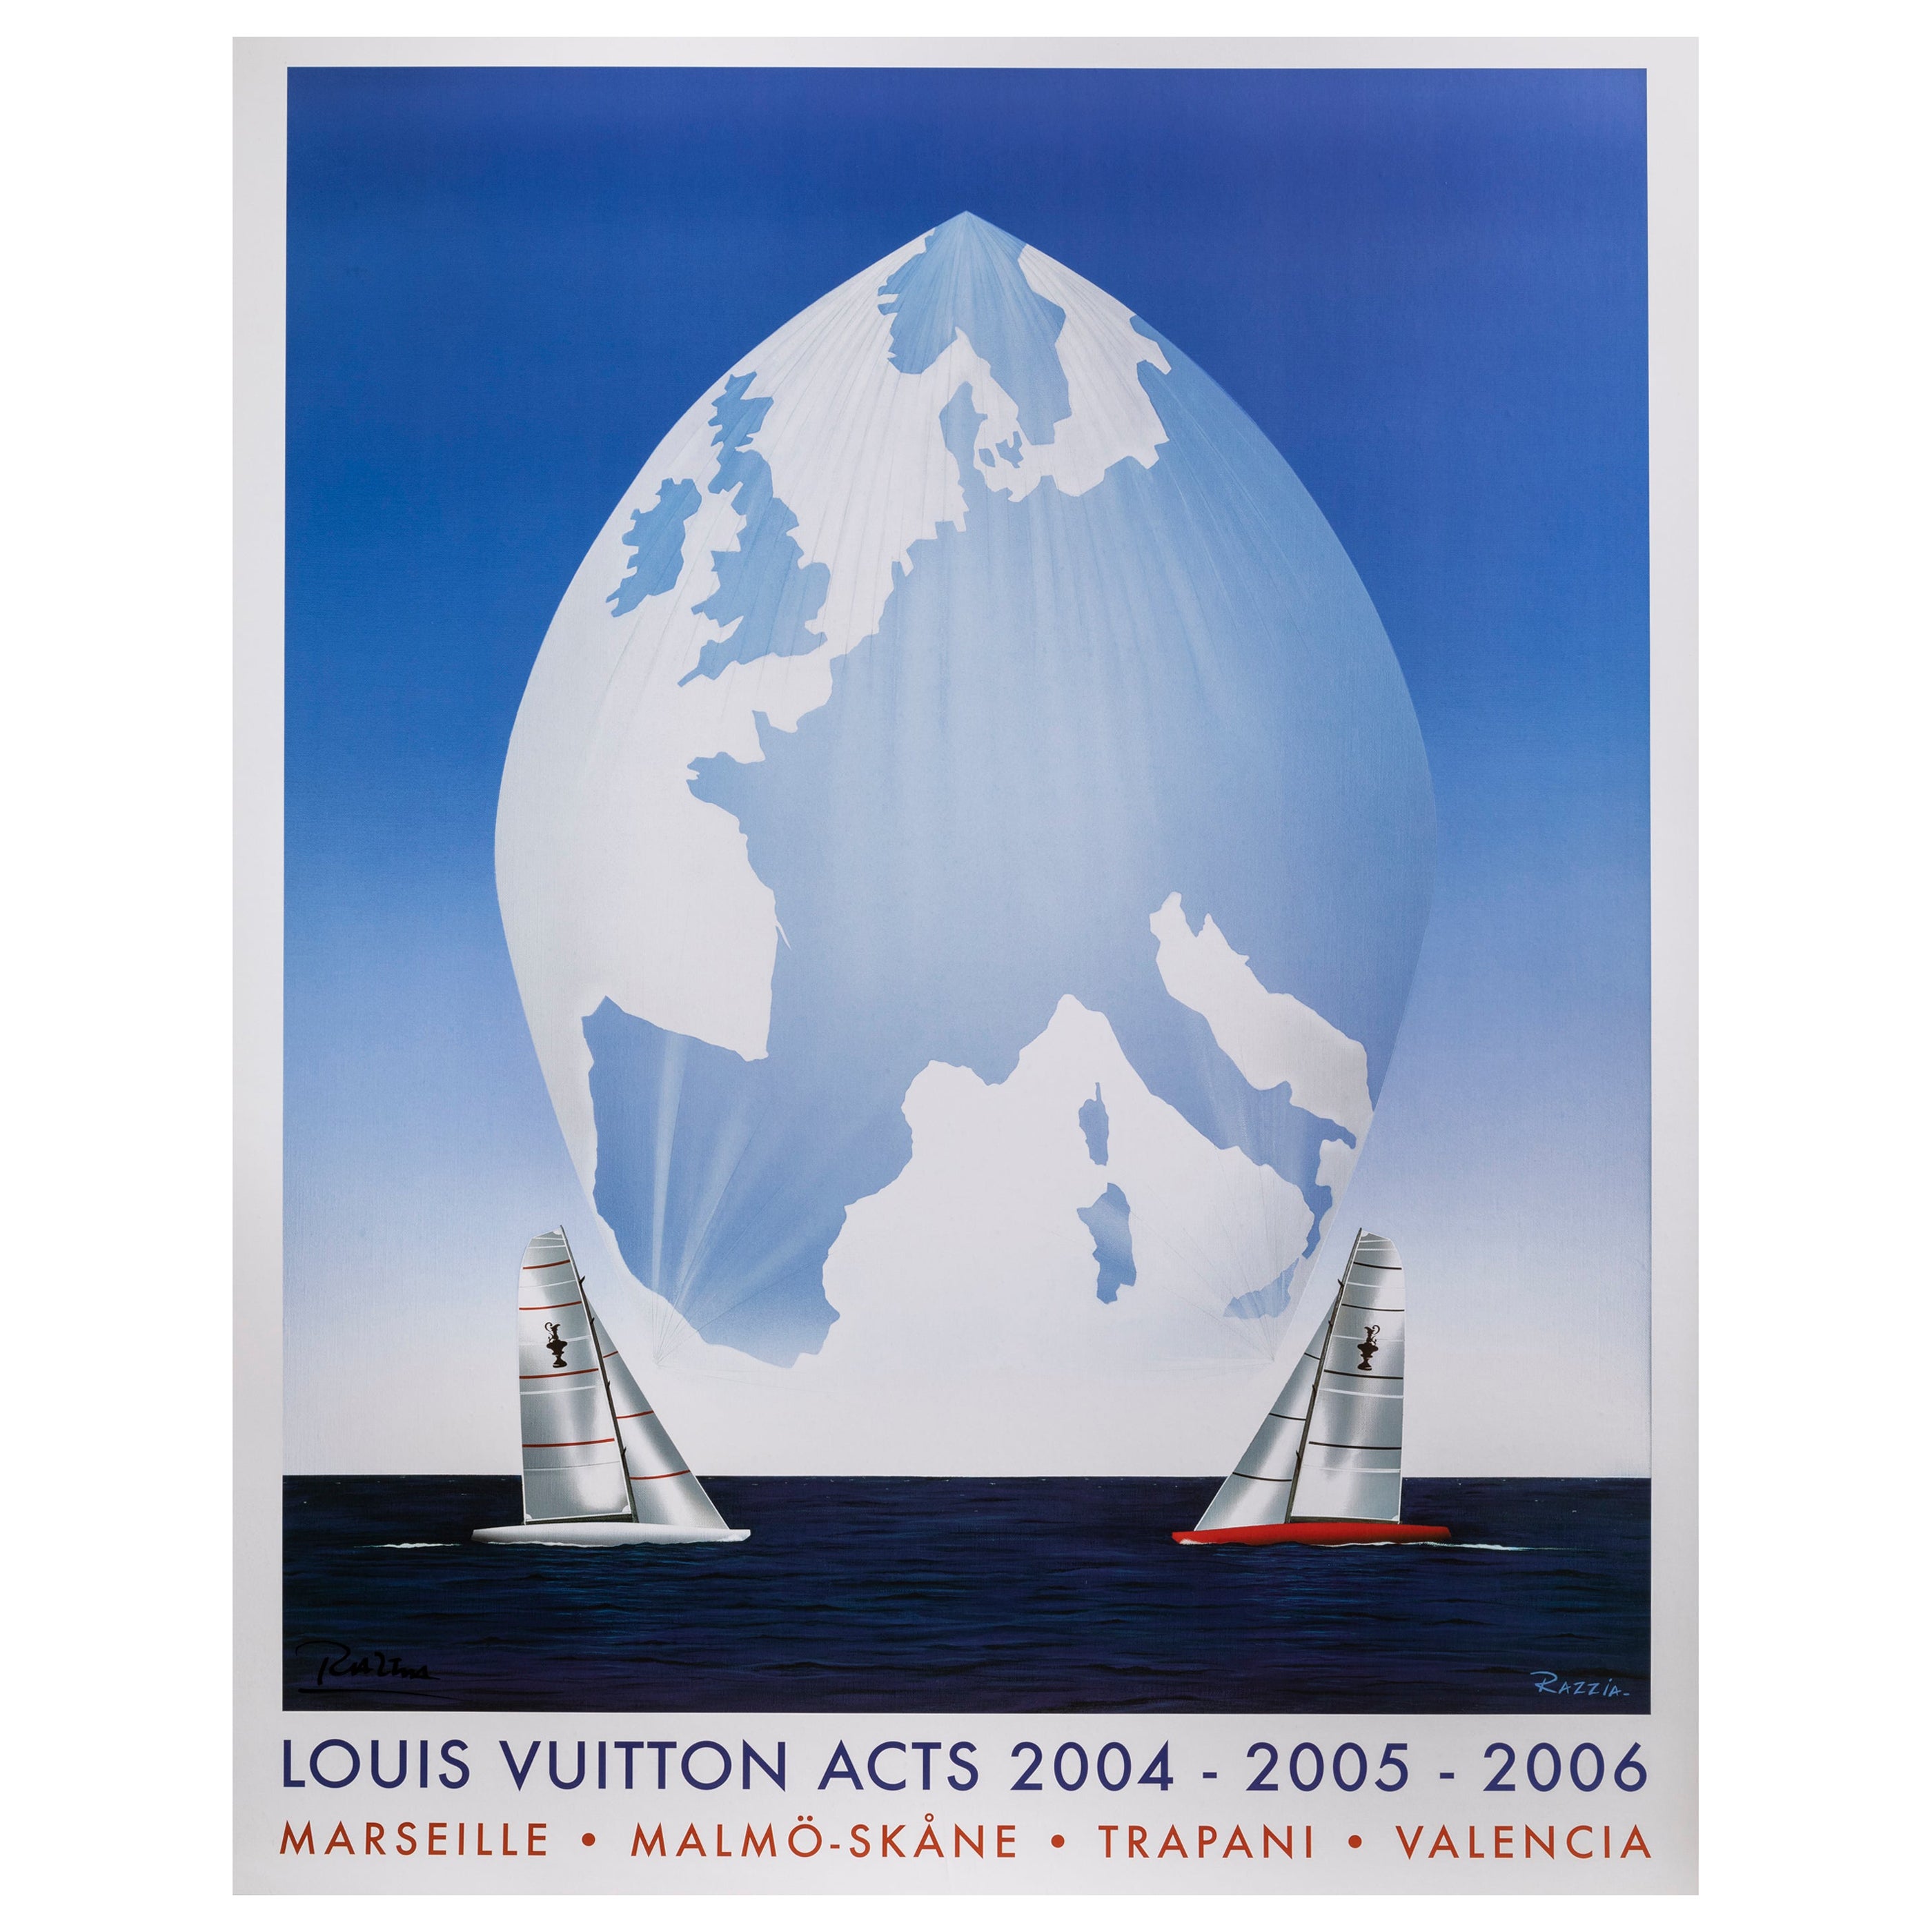 Razzia, Original Louis Vuitton ACTS, Sailing Ship, Boat, Marseille Spinaker 2006